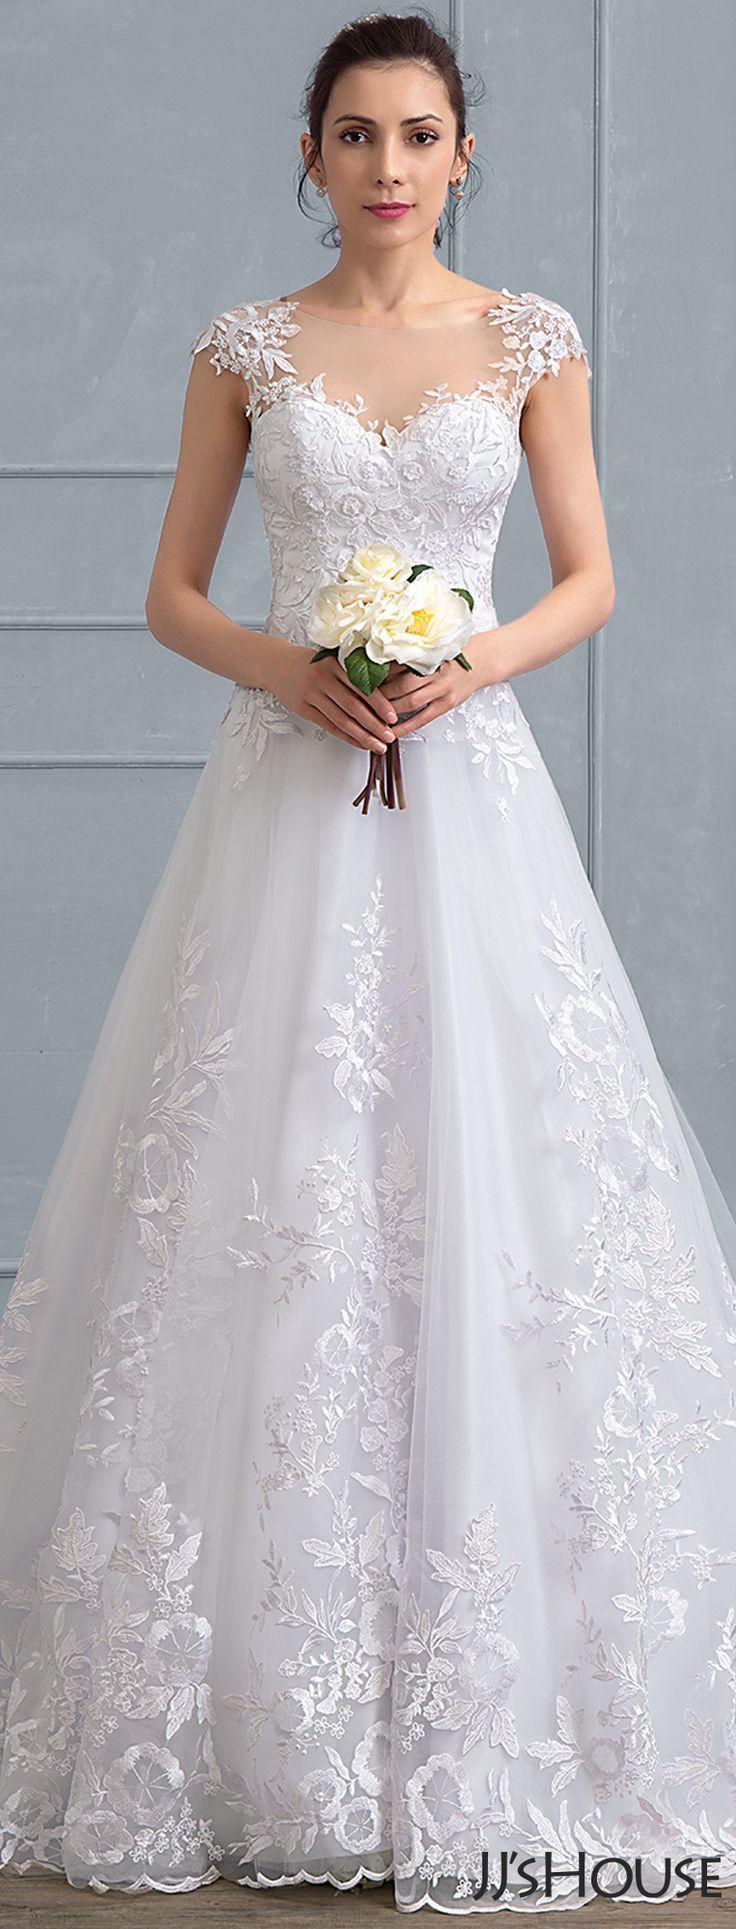 Hochzeit - A-Line/Princess Scoop Neck Court Train Tulle Lace Wedding Dress (002111937)